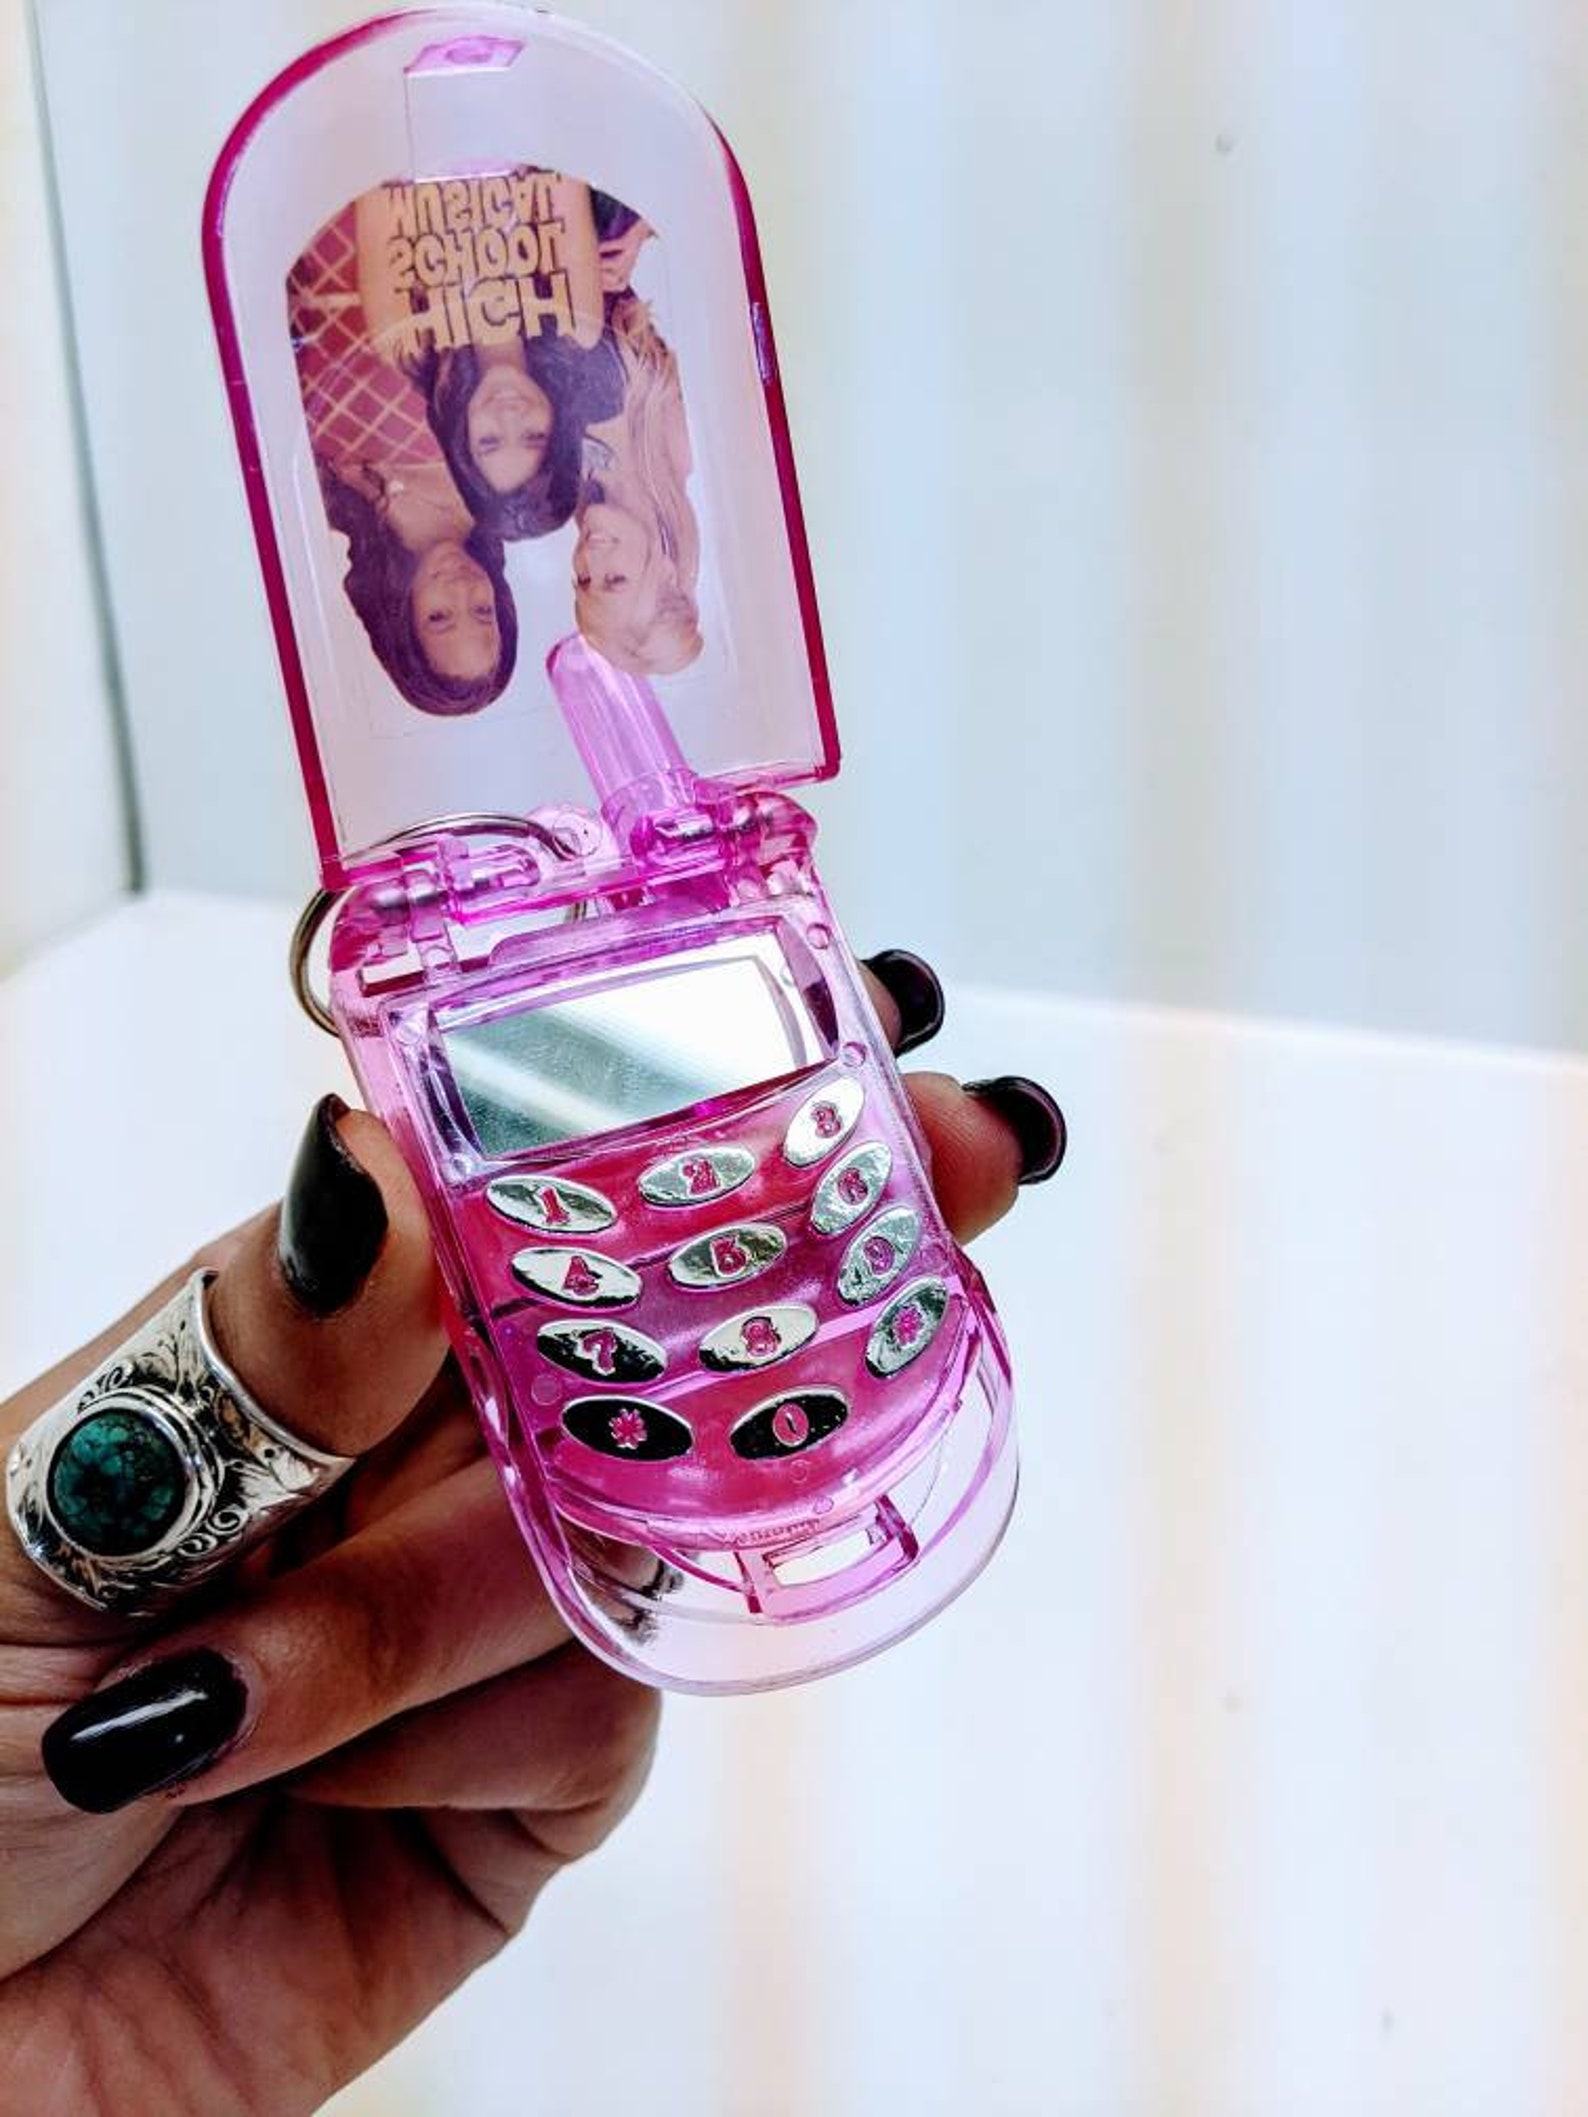 Retro Y2K Nostalgia High School Musical Miniature Cell Phone - Etsy